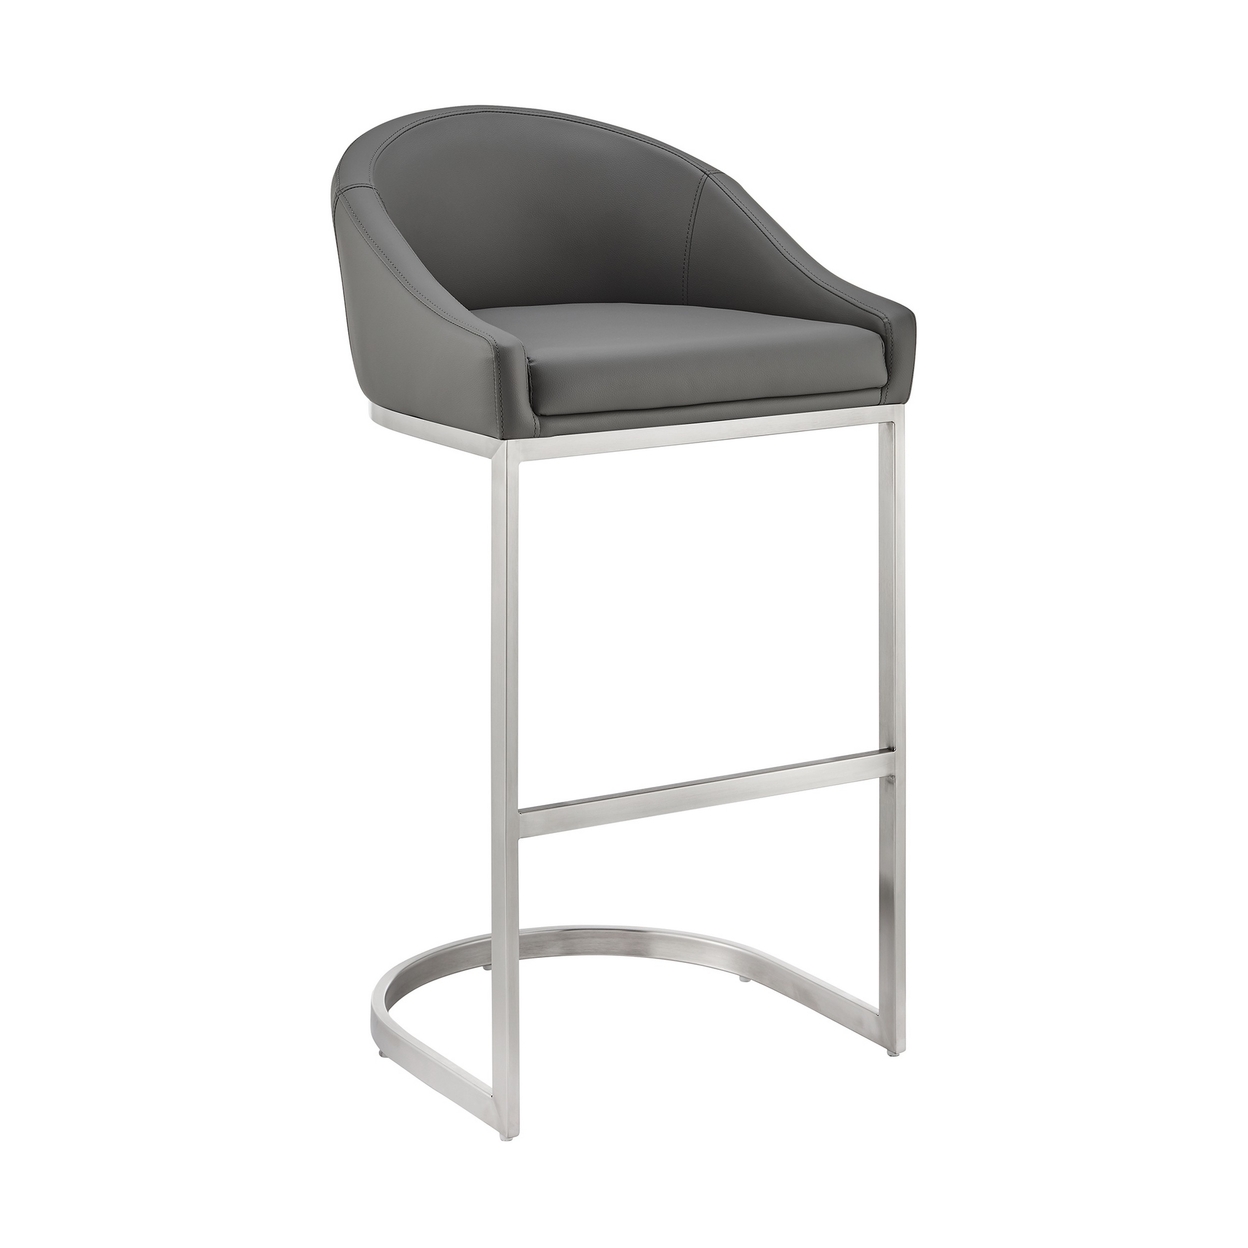 Lina 28 Inch Bar Stool Chair, Metal Cantilever Base, Gray Faux Leather- Saltoro Sherpi